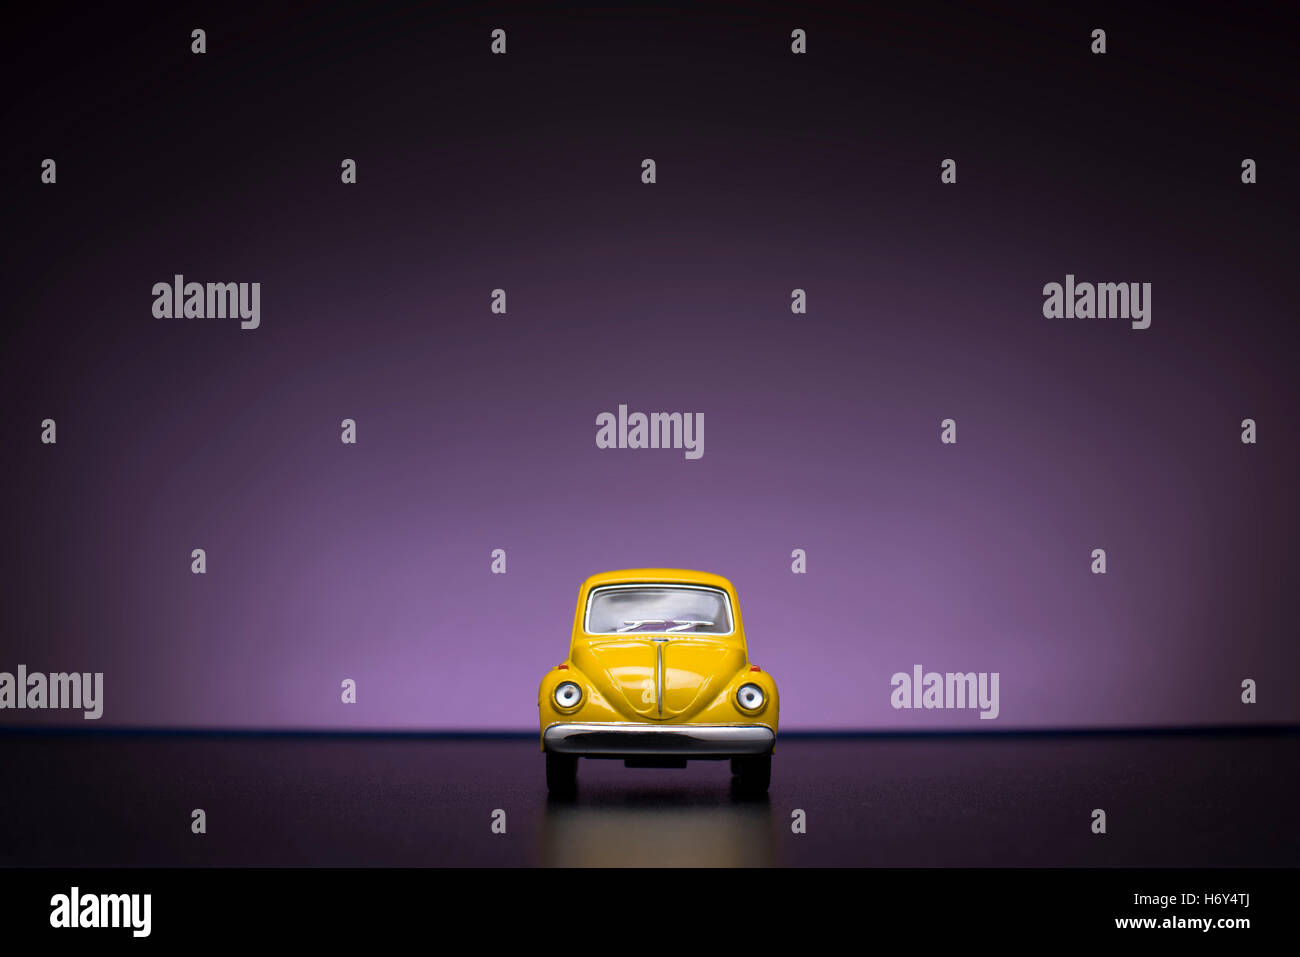 Izmir, Turkey - February 16, 2015. Toy Volkswagen Beetle on purple background. Stock Photo